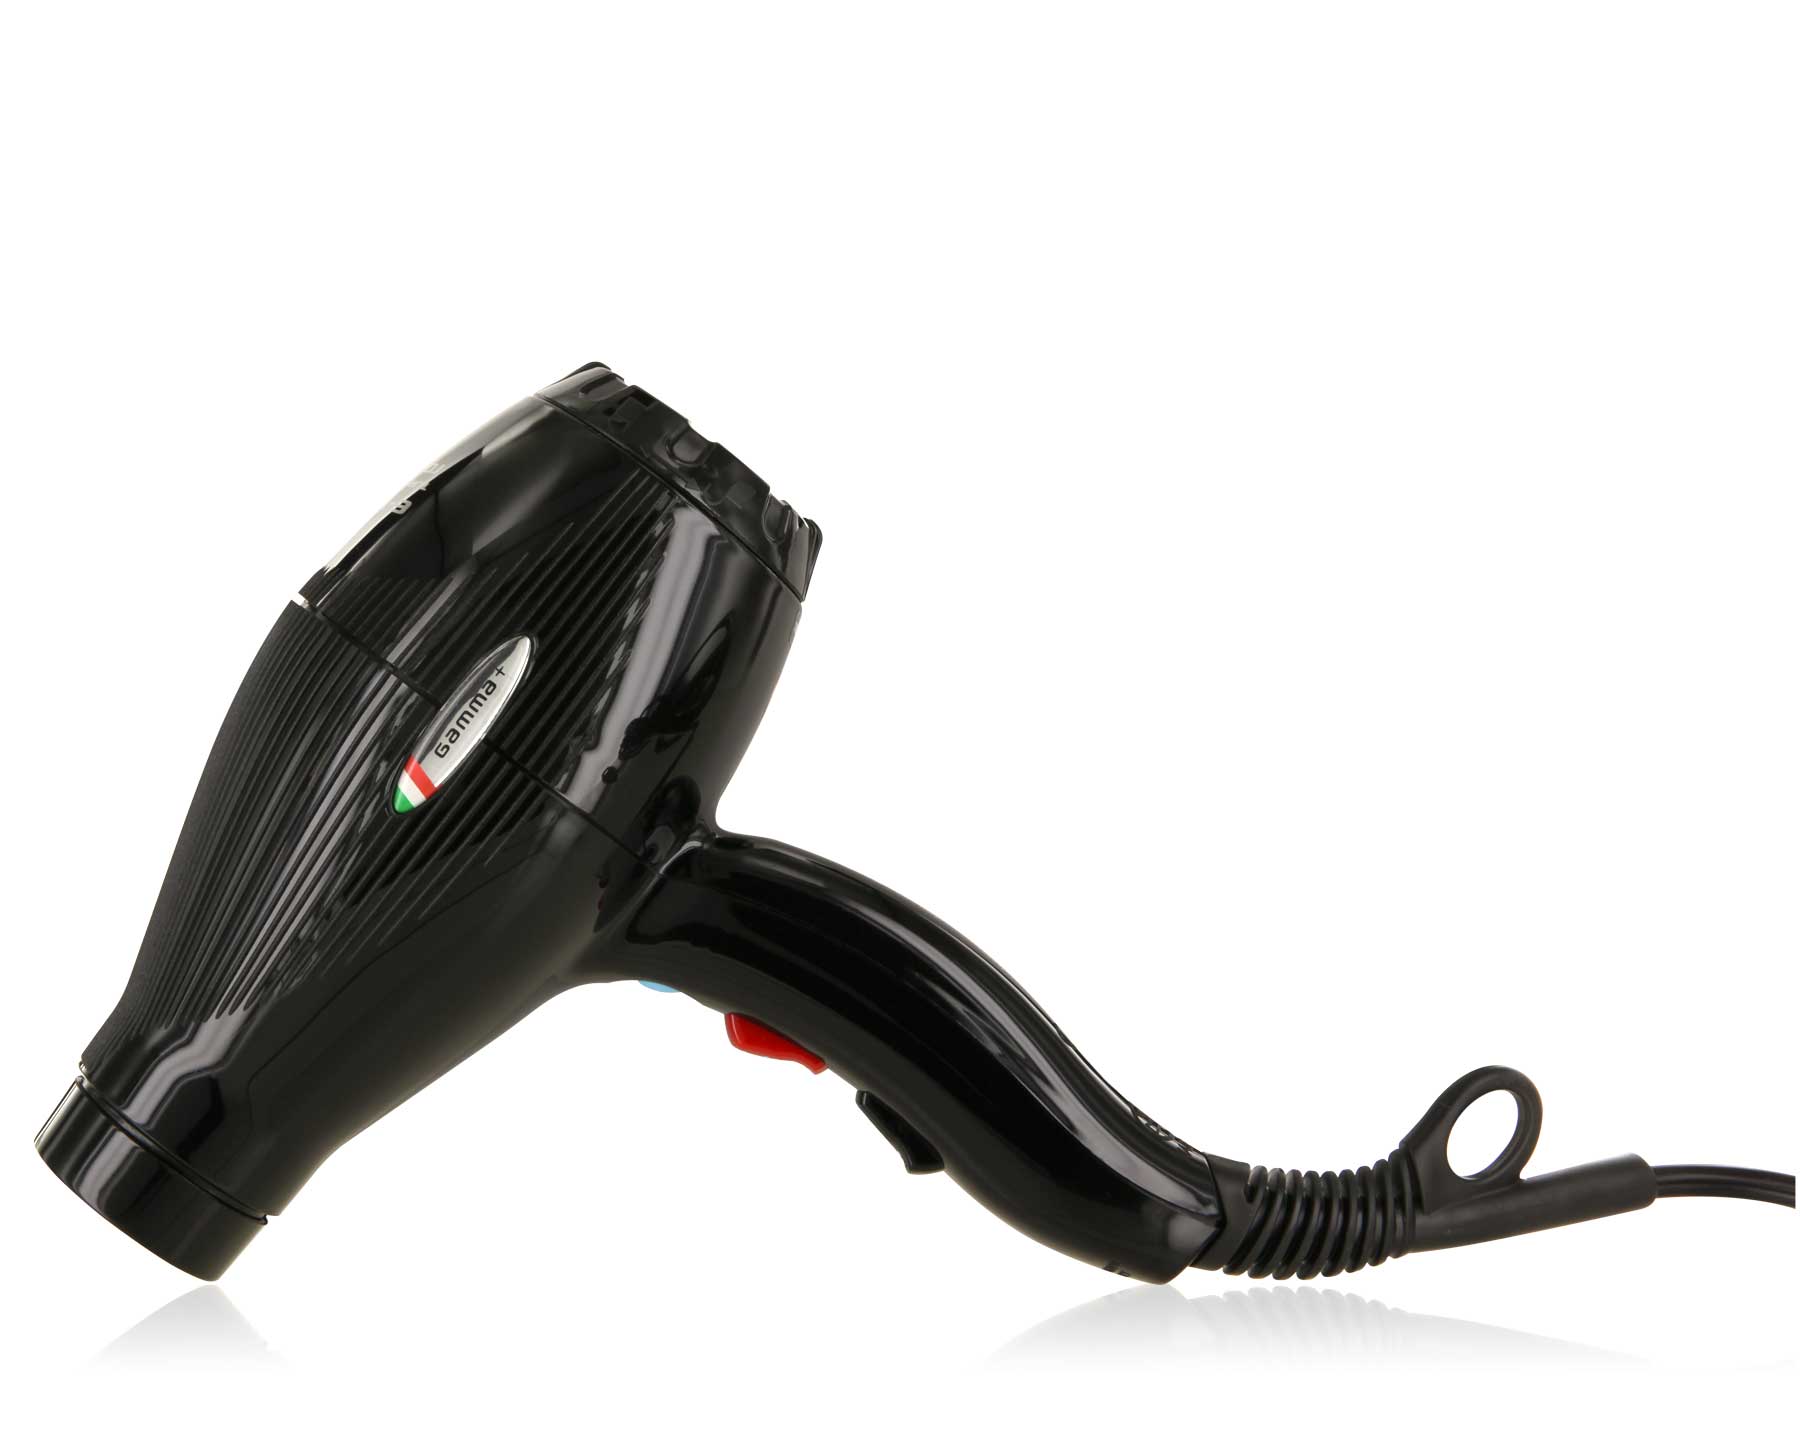 GAMMA PIU' PHON E-T.C. LIGHT TORMALIONIC NERO 1800-2100 W - Fon - NLB  Hairdiscount - Vendita online prodotti per parrucchieri